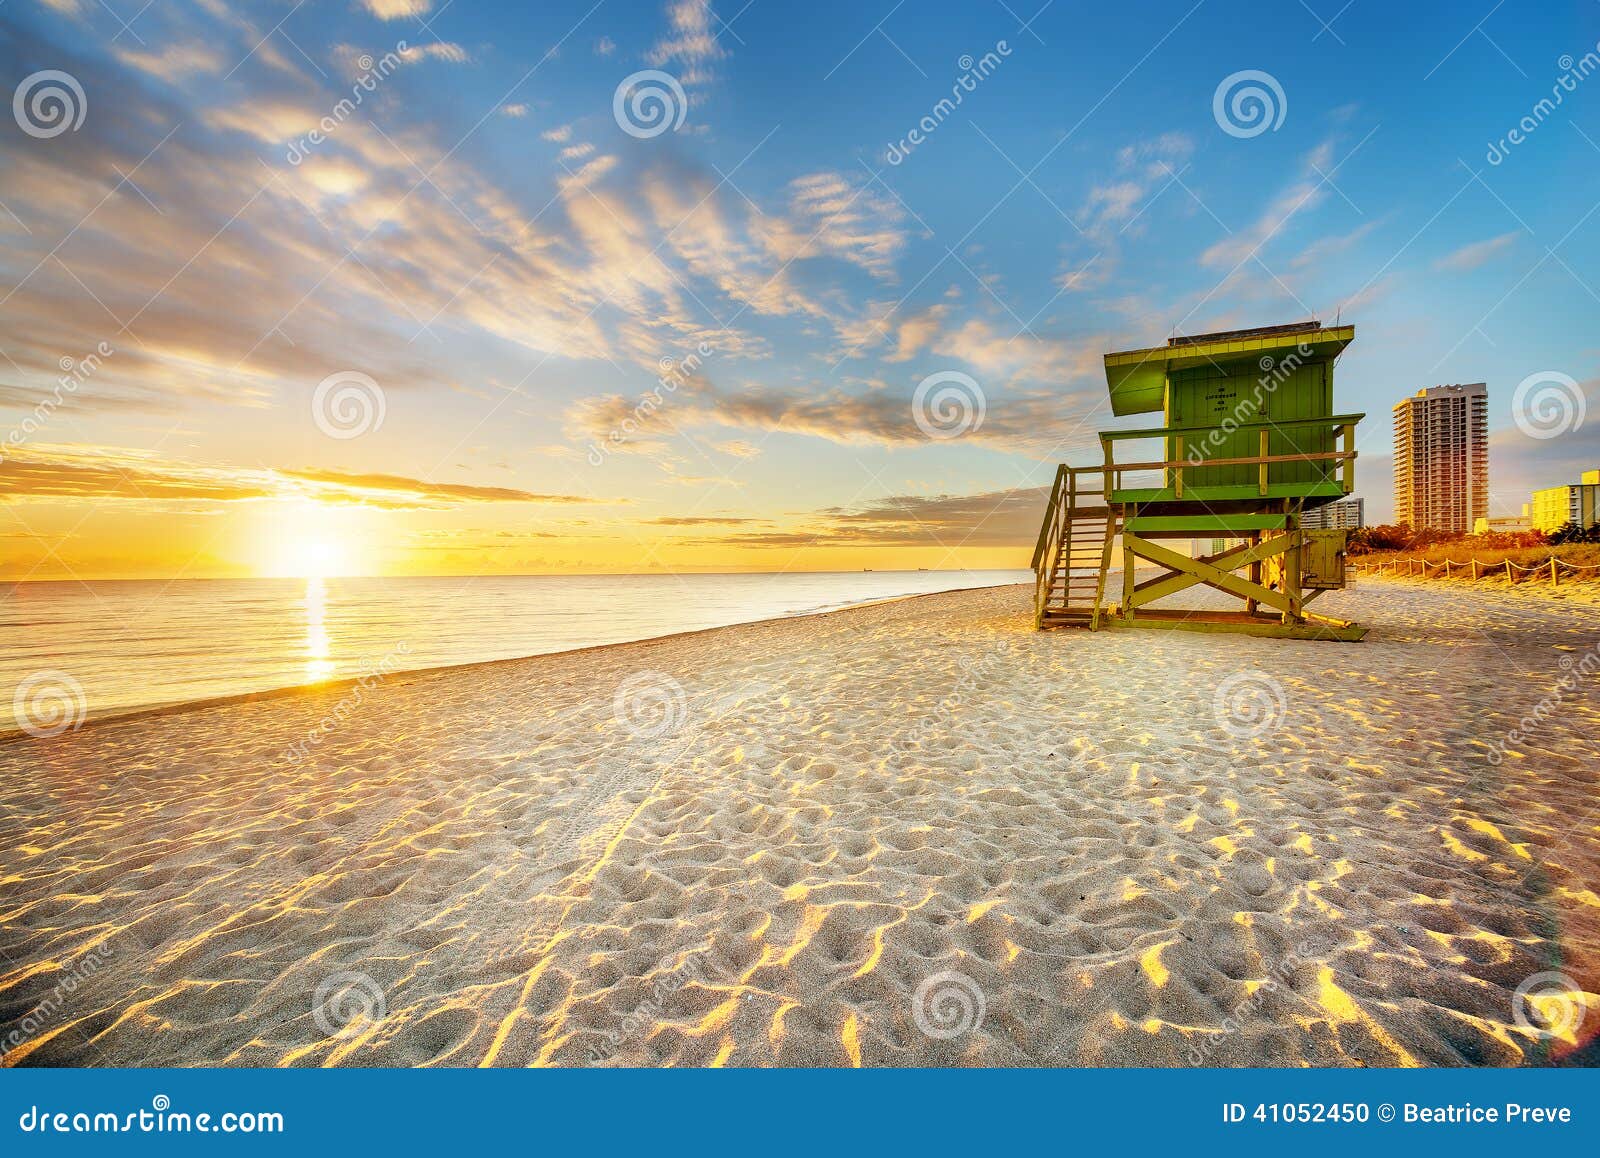 miami south beach sunrise